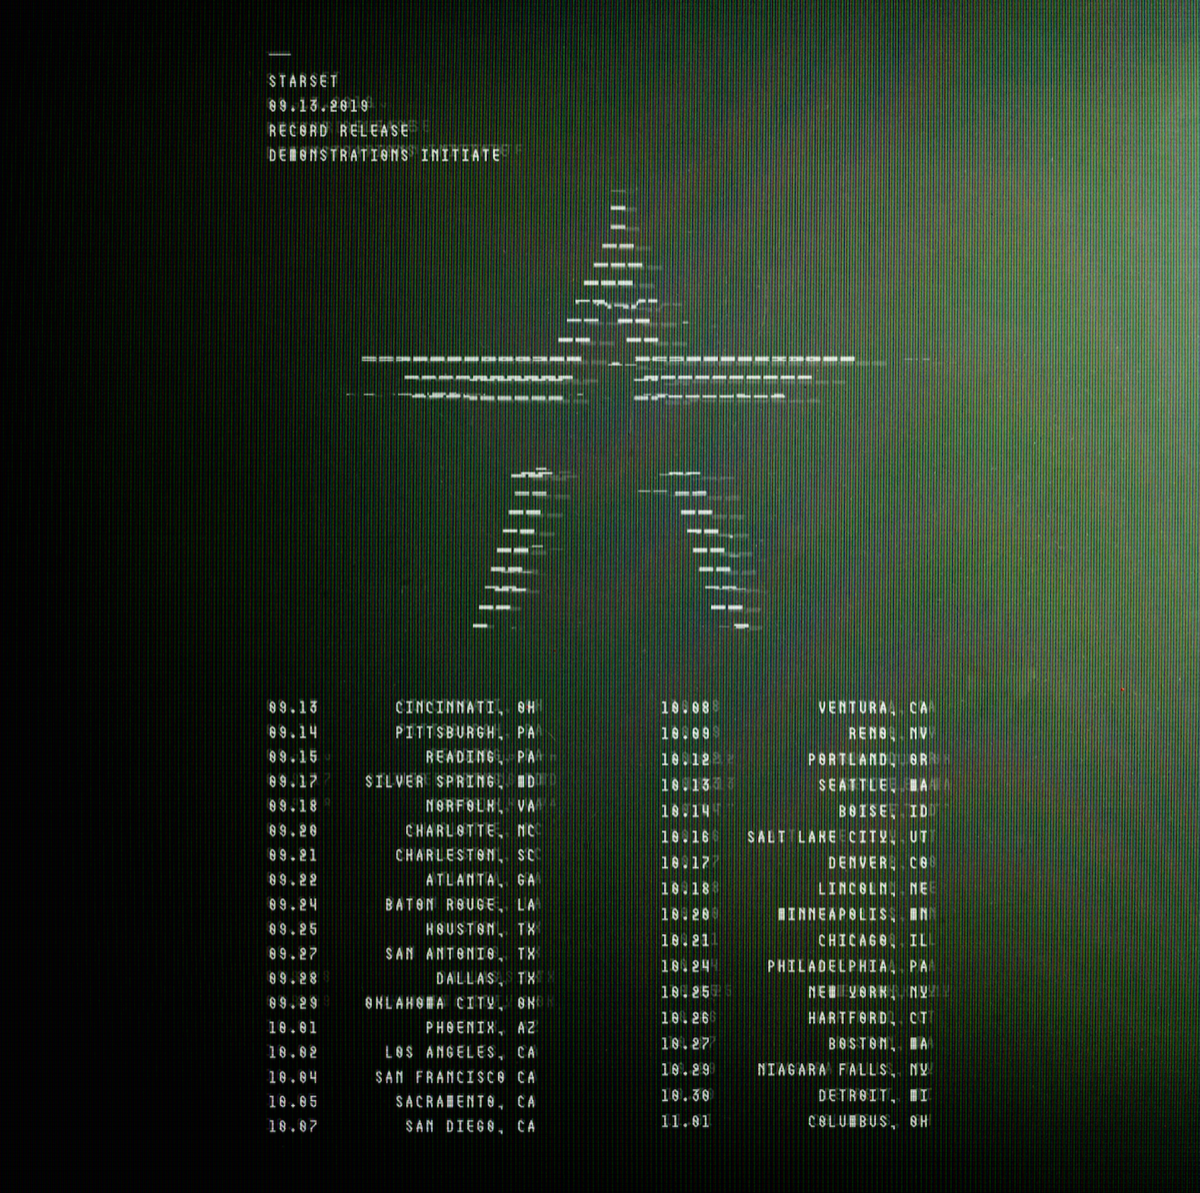 STARSET Announce New Album + U.S. Tour